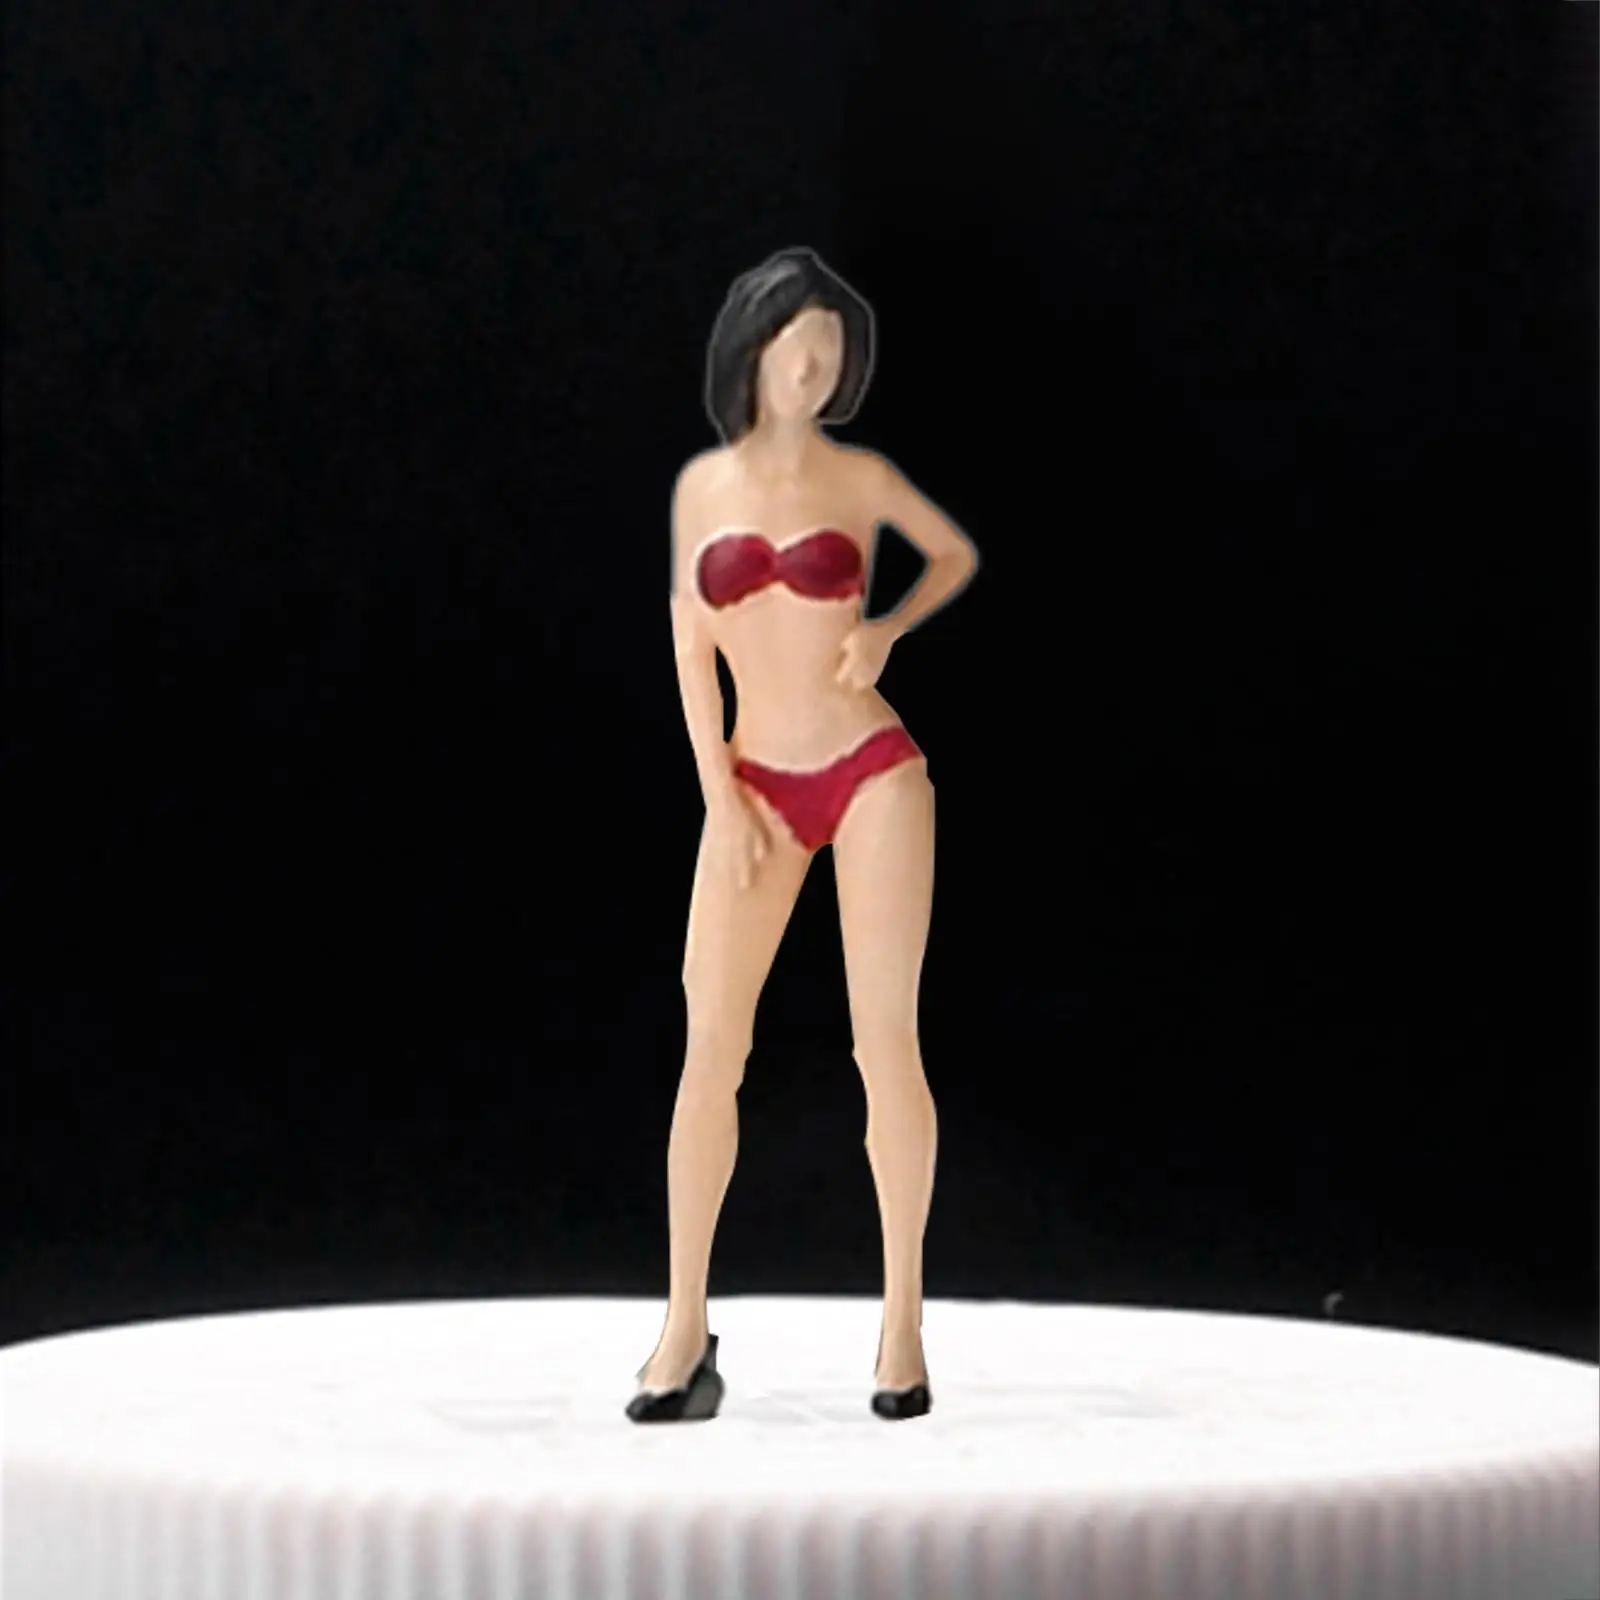 1/64 Scale Model People Figures Ornament Mini People Model Resin 1/64 Female Models Figurine for DIY Scene Dollhouse Layout